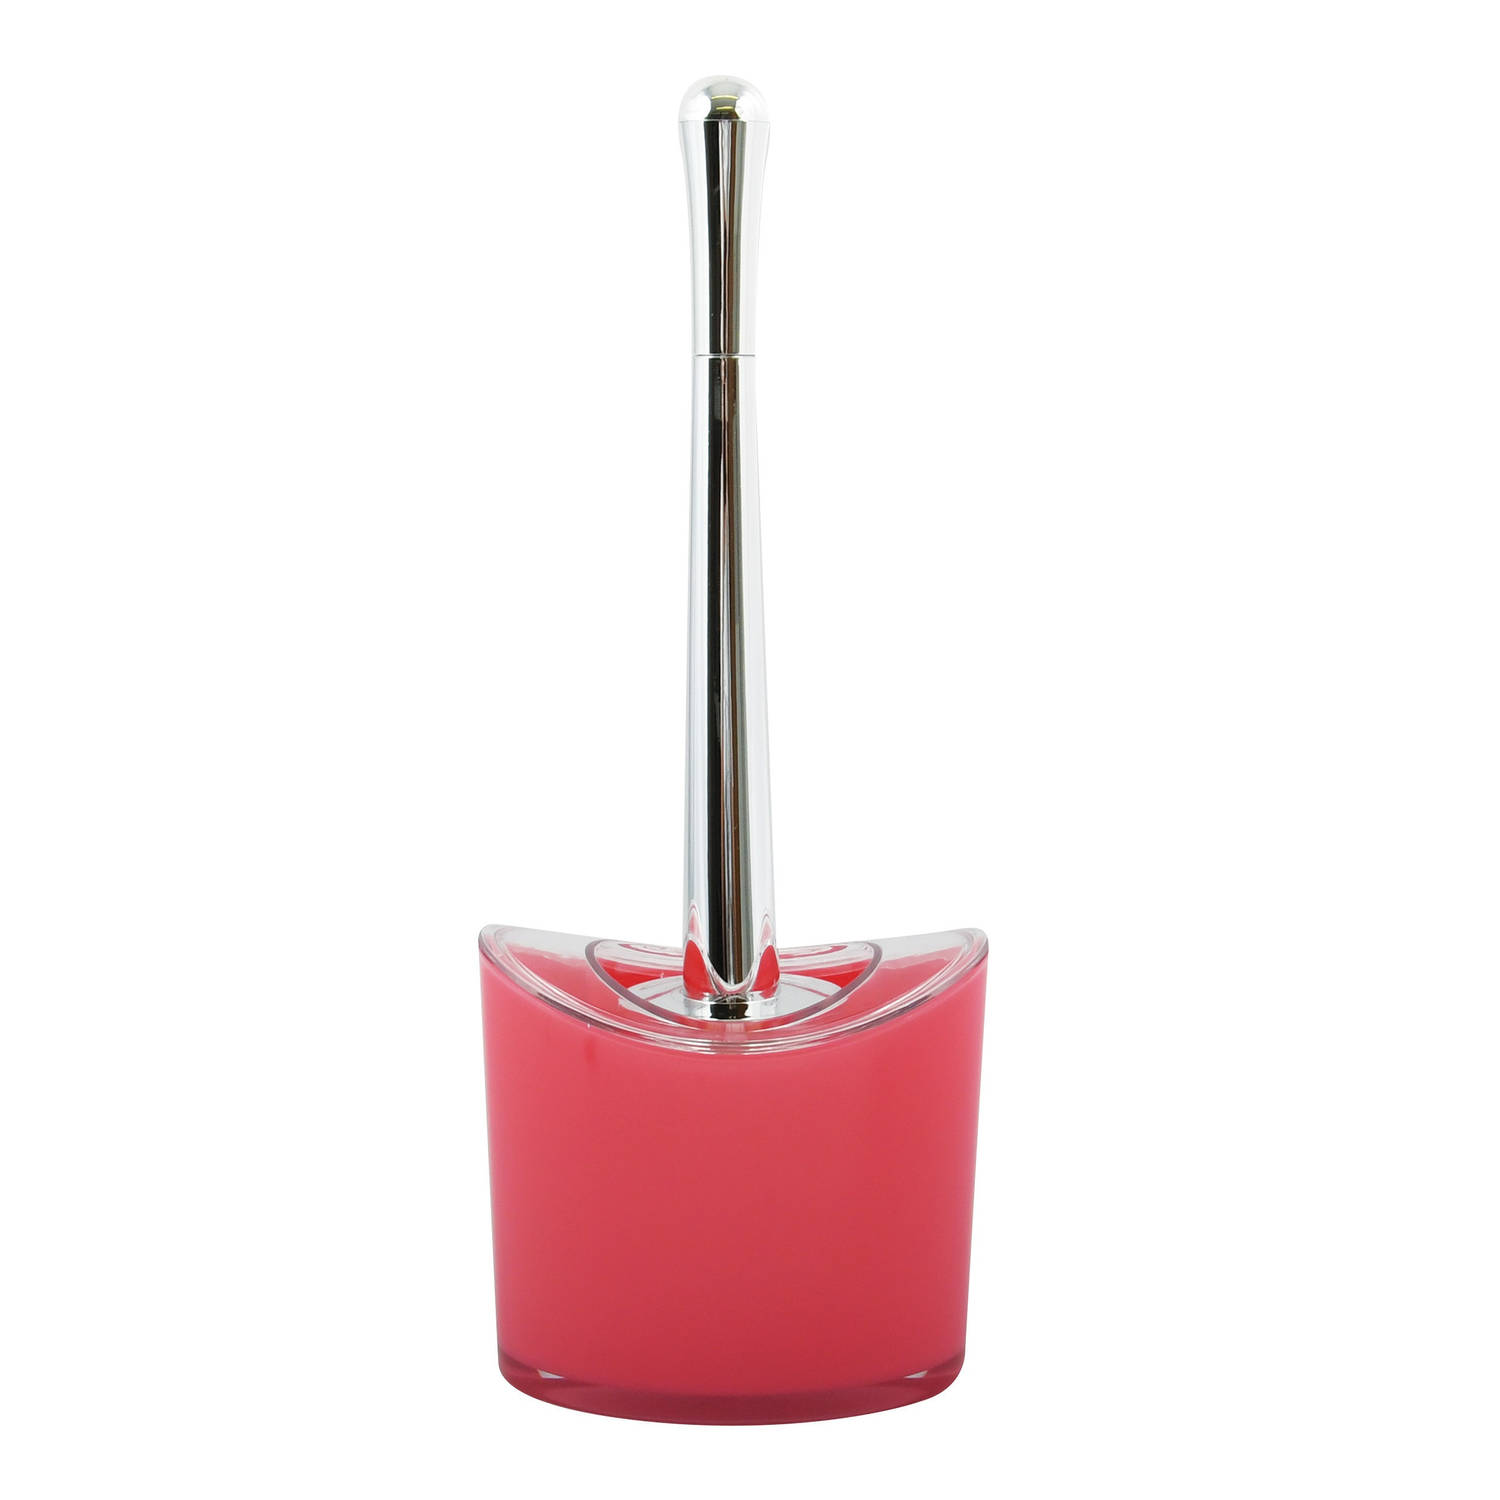 MSV Toiletborstel in houder/wc-borstel Aveiro - PS kunststof/rvs - fuchsia roze/zilver - 37 x 14 cm